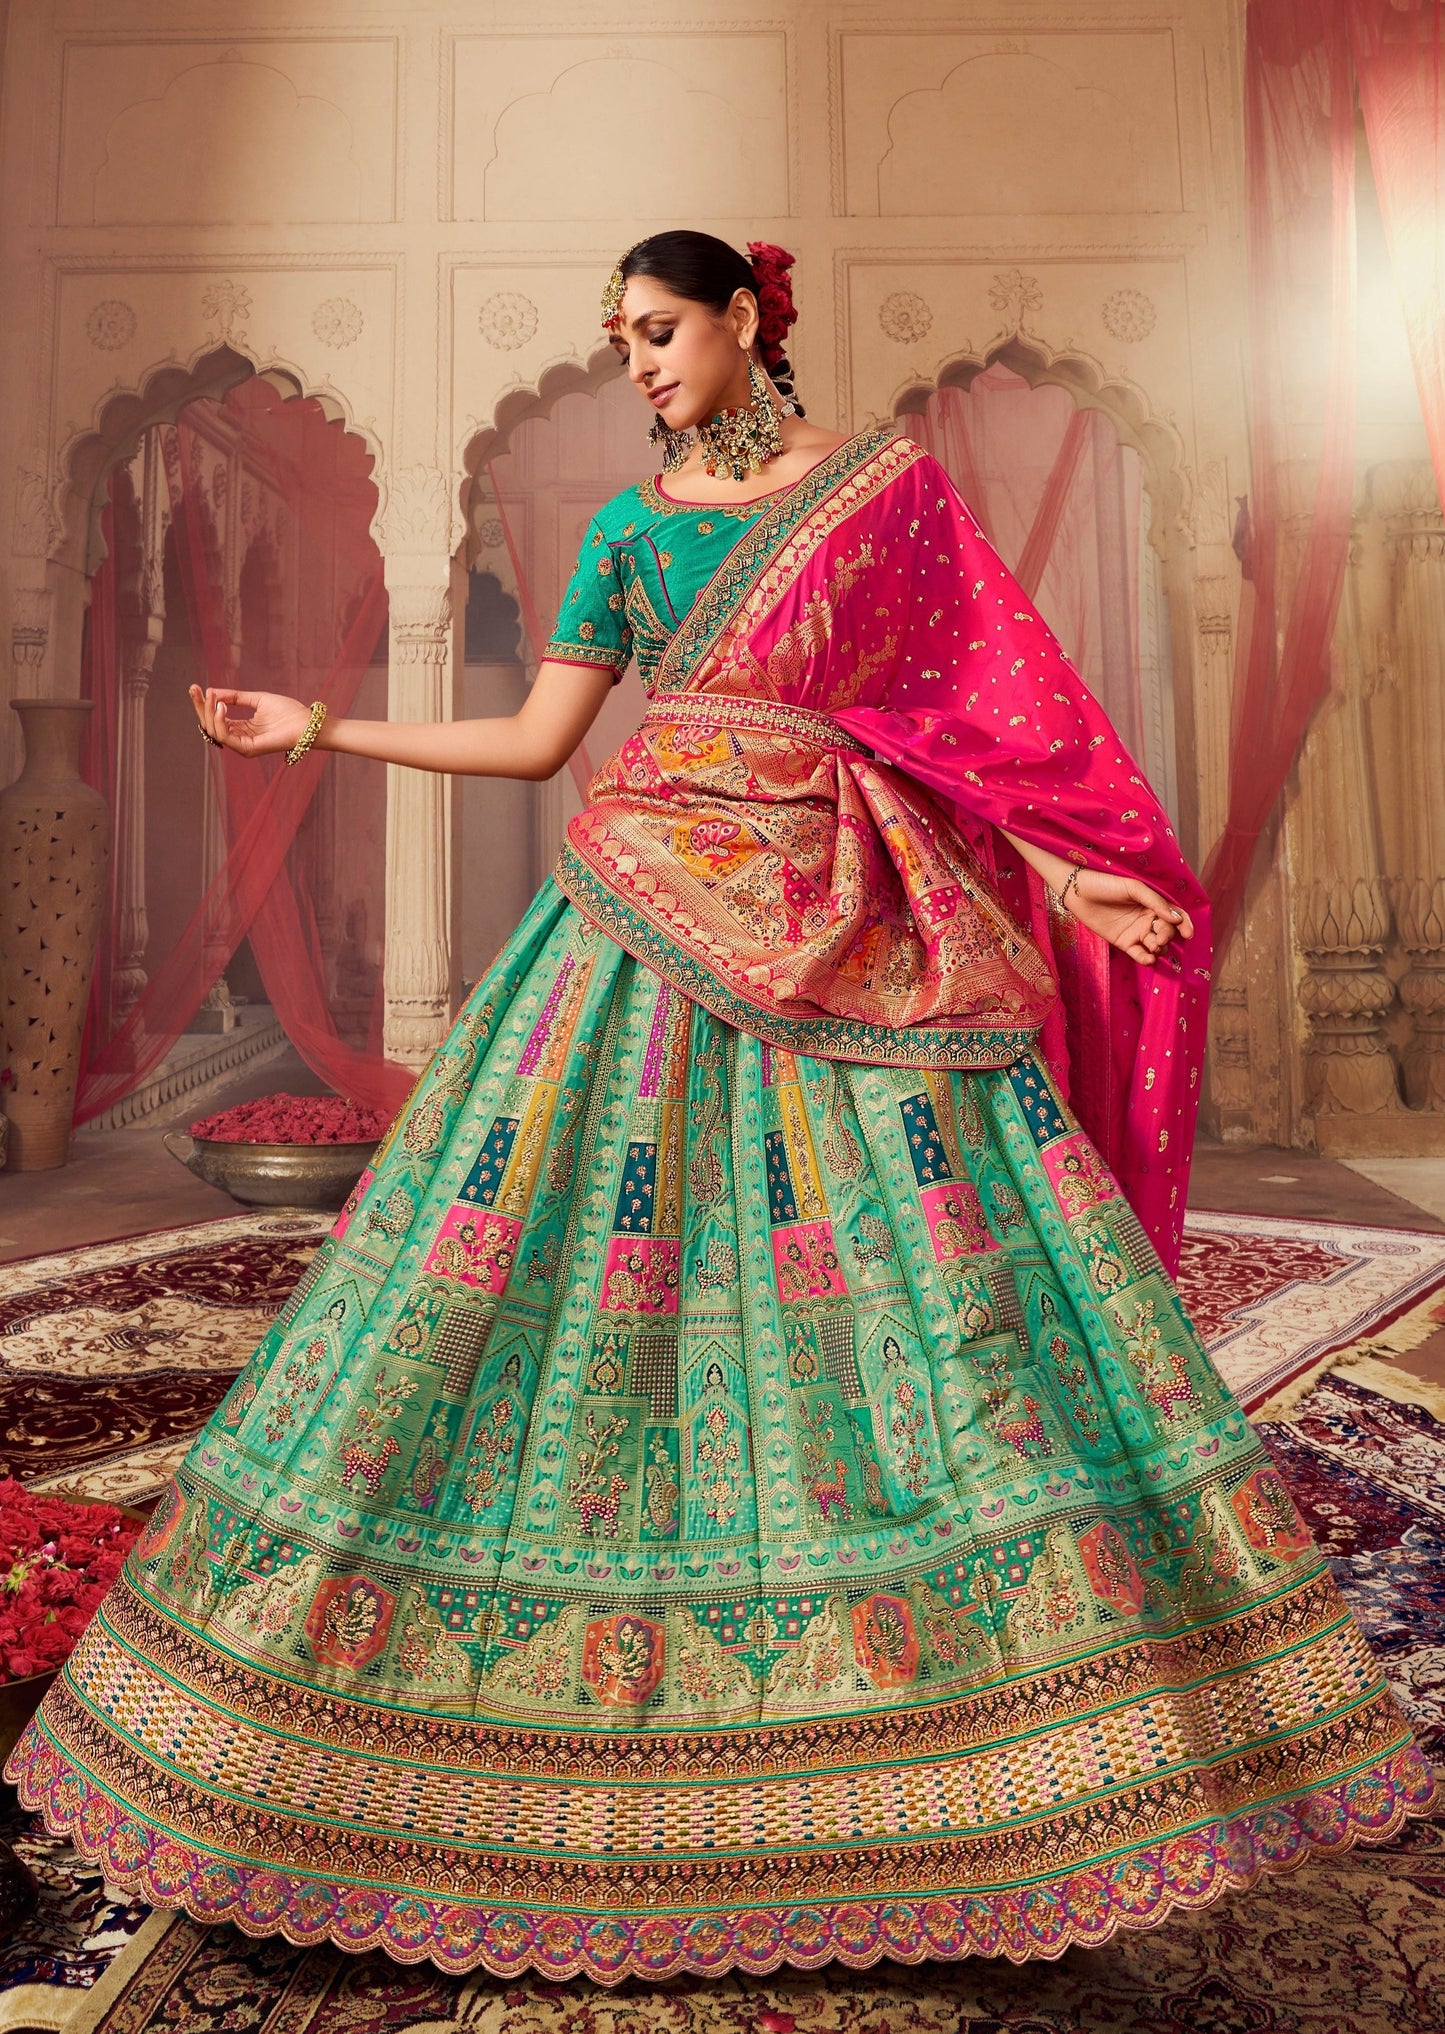 Bride in banarasi silk green lehenga choli with pink dupatta.